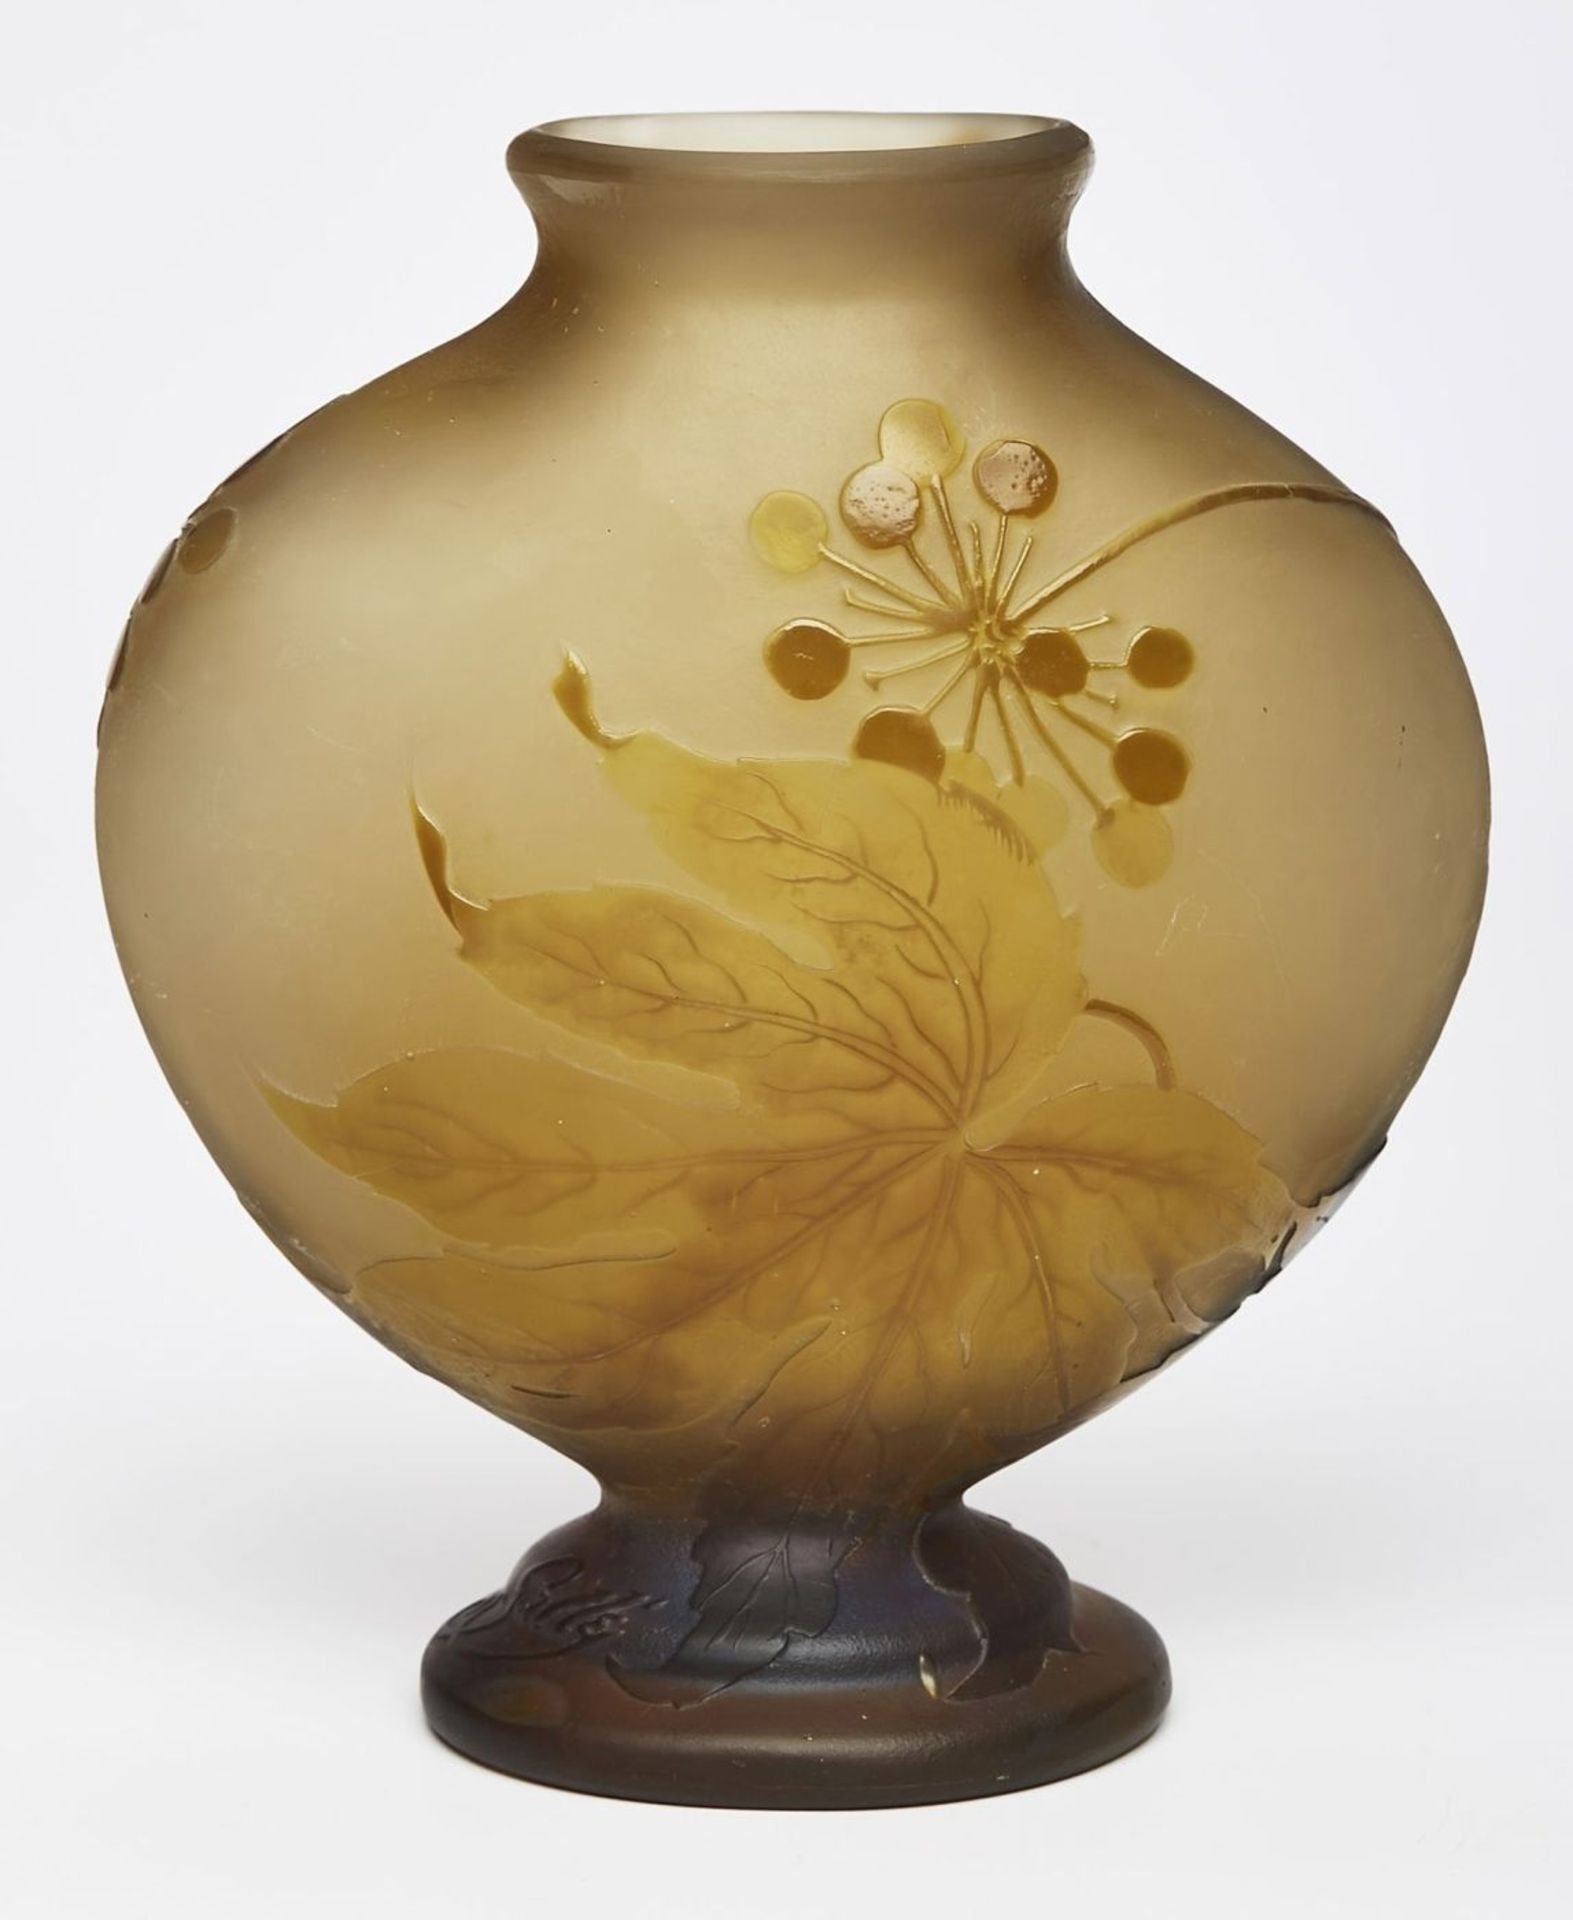 Vase mit Beerendekor, Jugendstil, Gallé um 1915. - Bild 2 aus 2